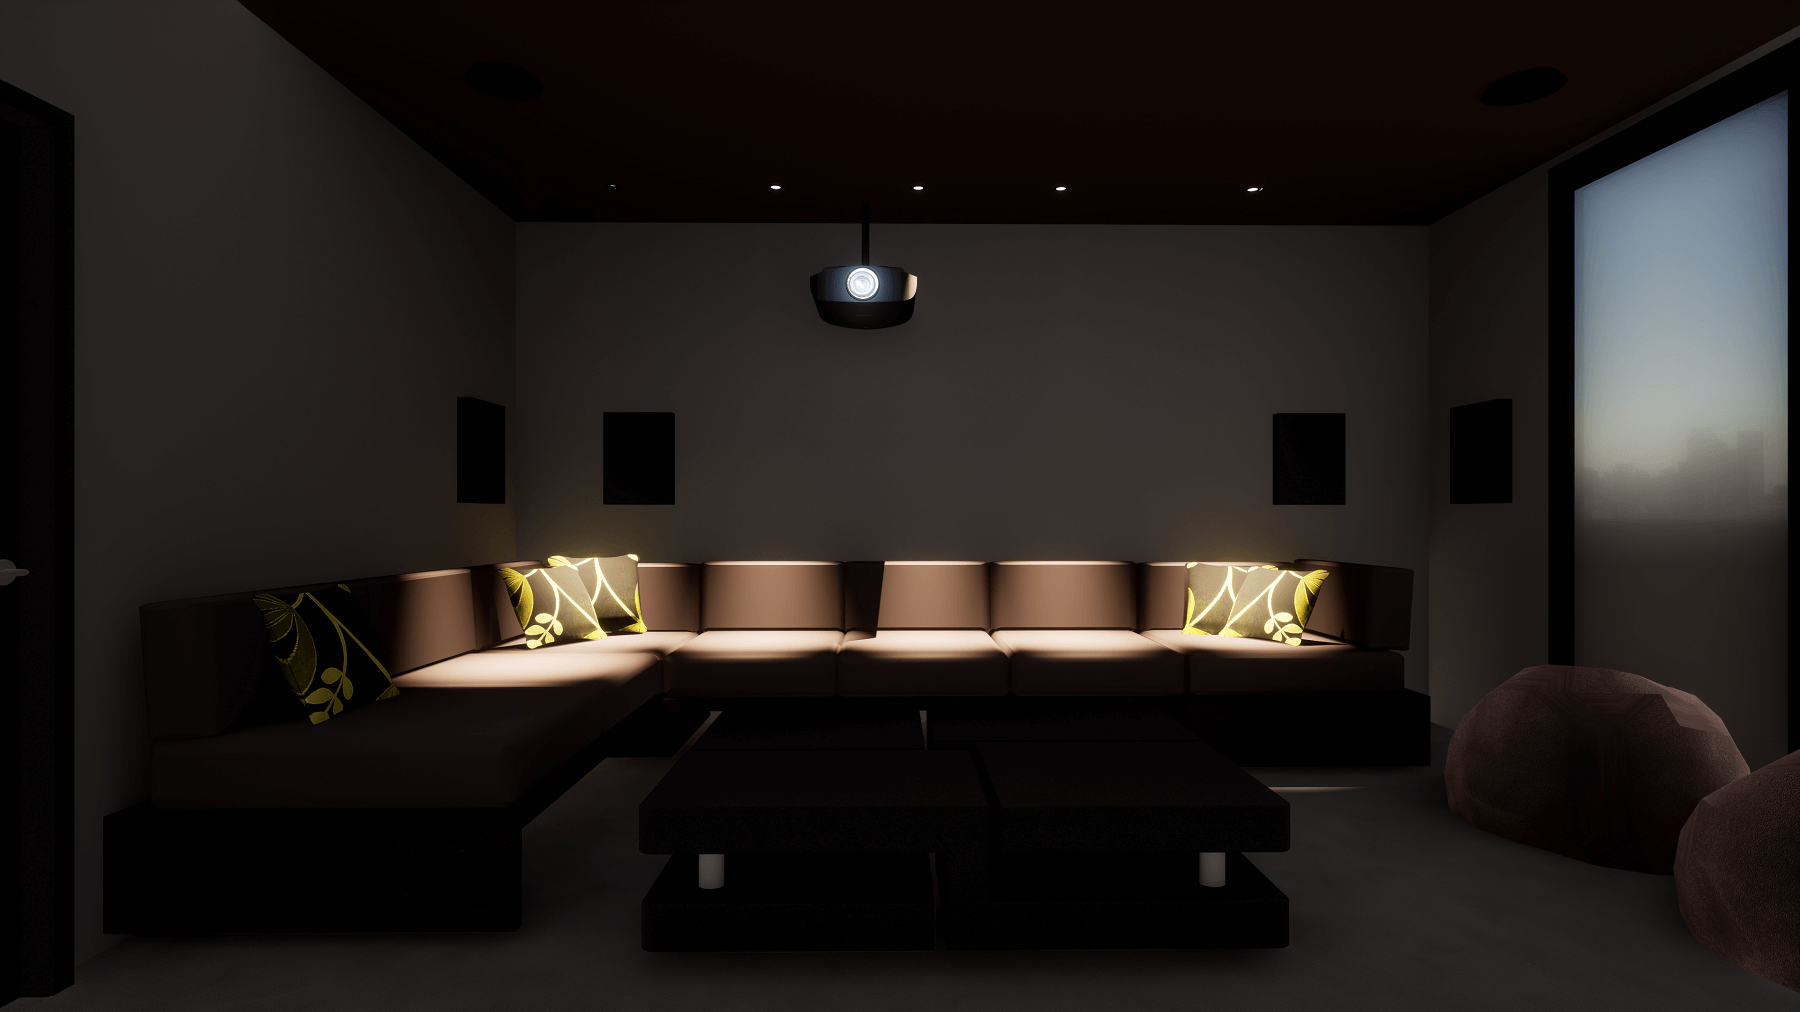 Living Room Home Cinema - Seating View